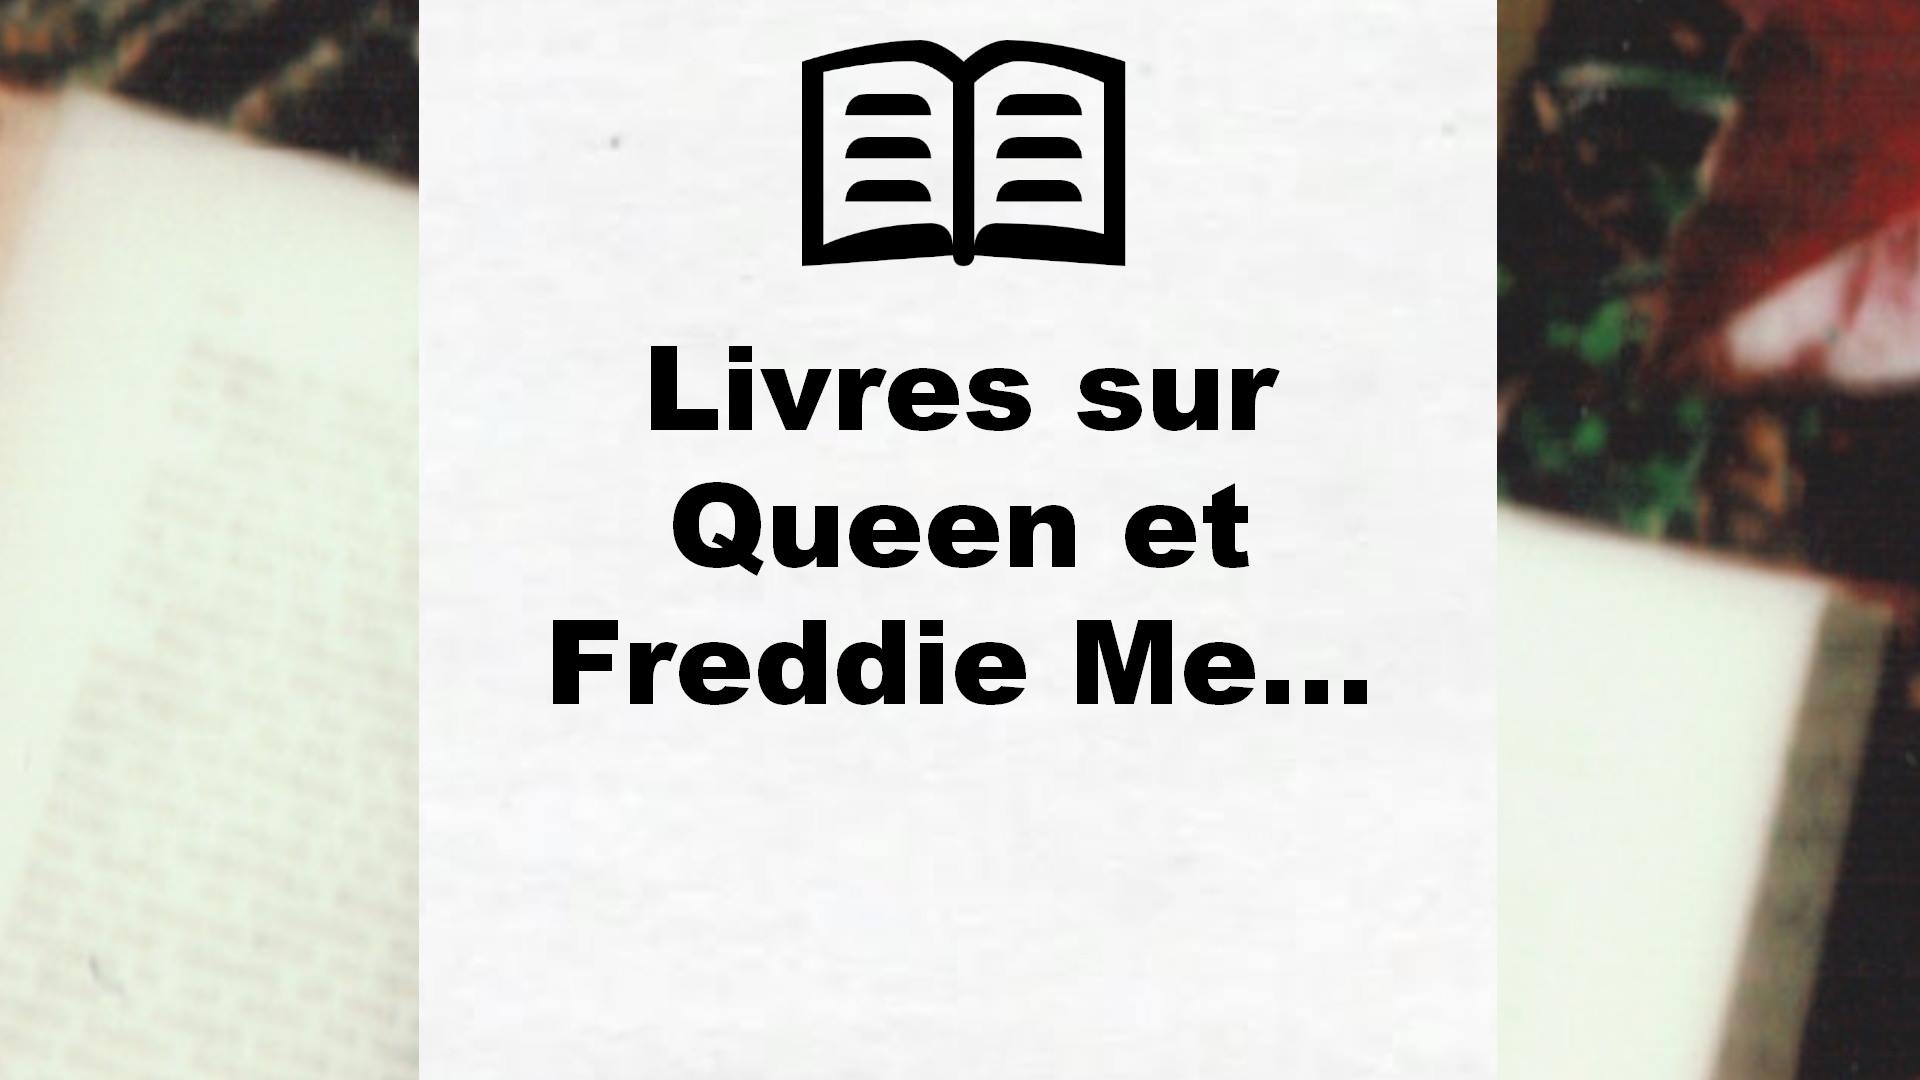 Livres sur Queen et Freddie Mercury